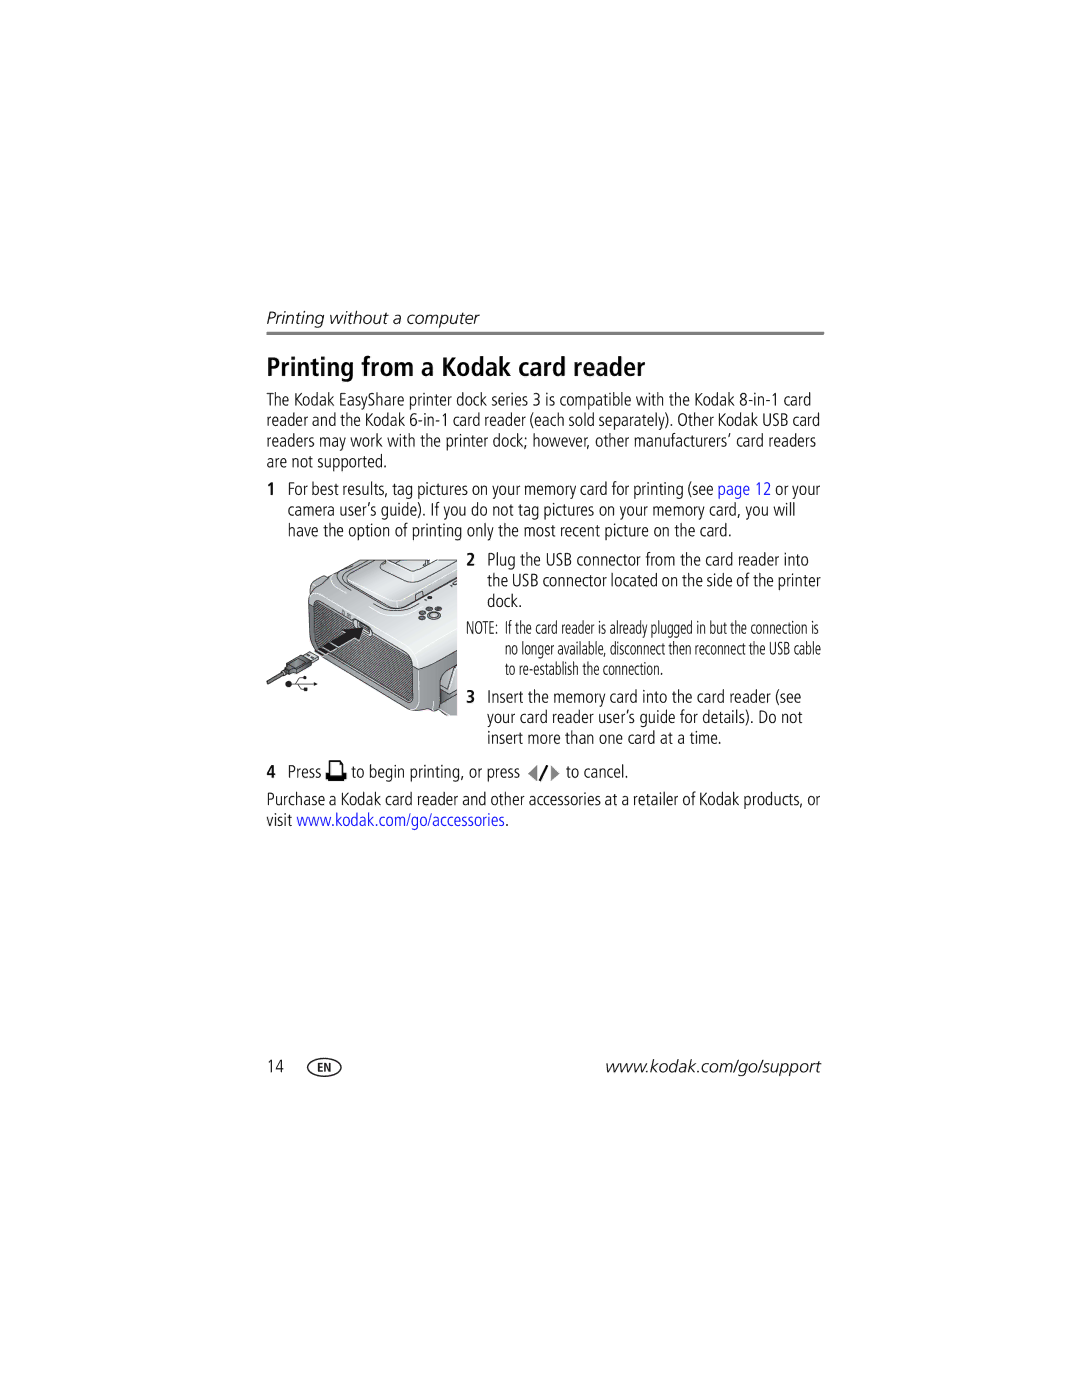 Kodak Series 3 manual Printing from a Kodak card reader, Dock, Press to begin printing, or press to cancel 